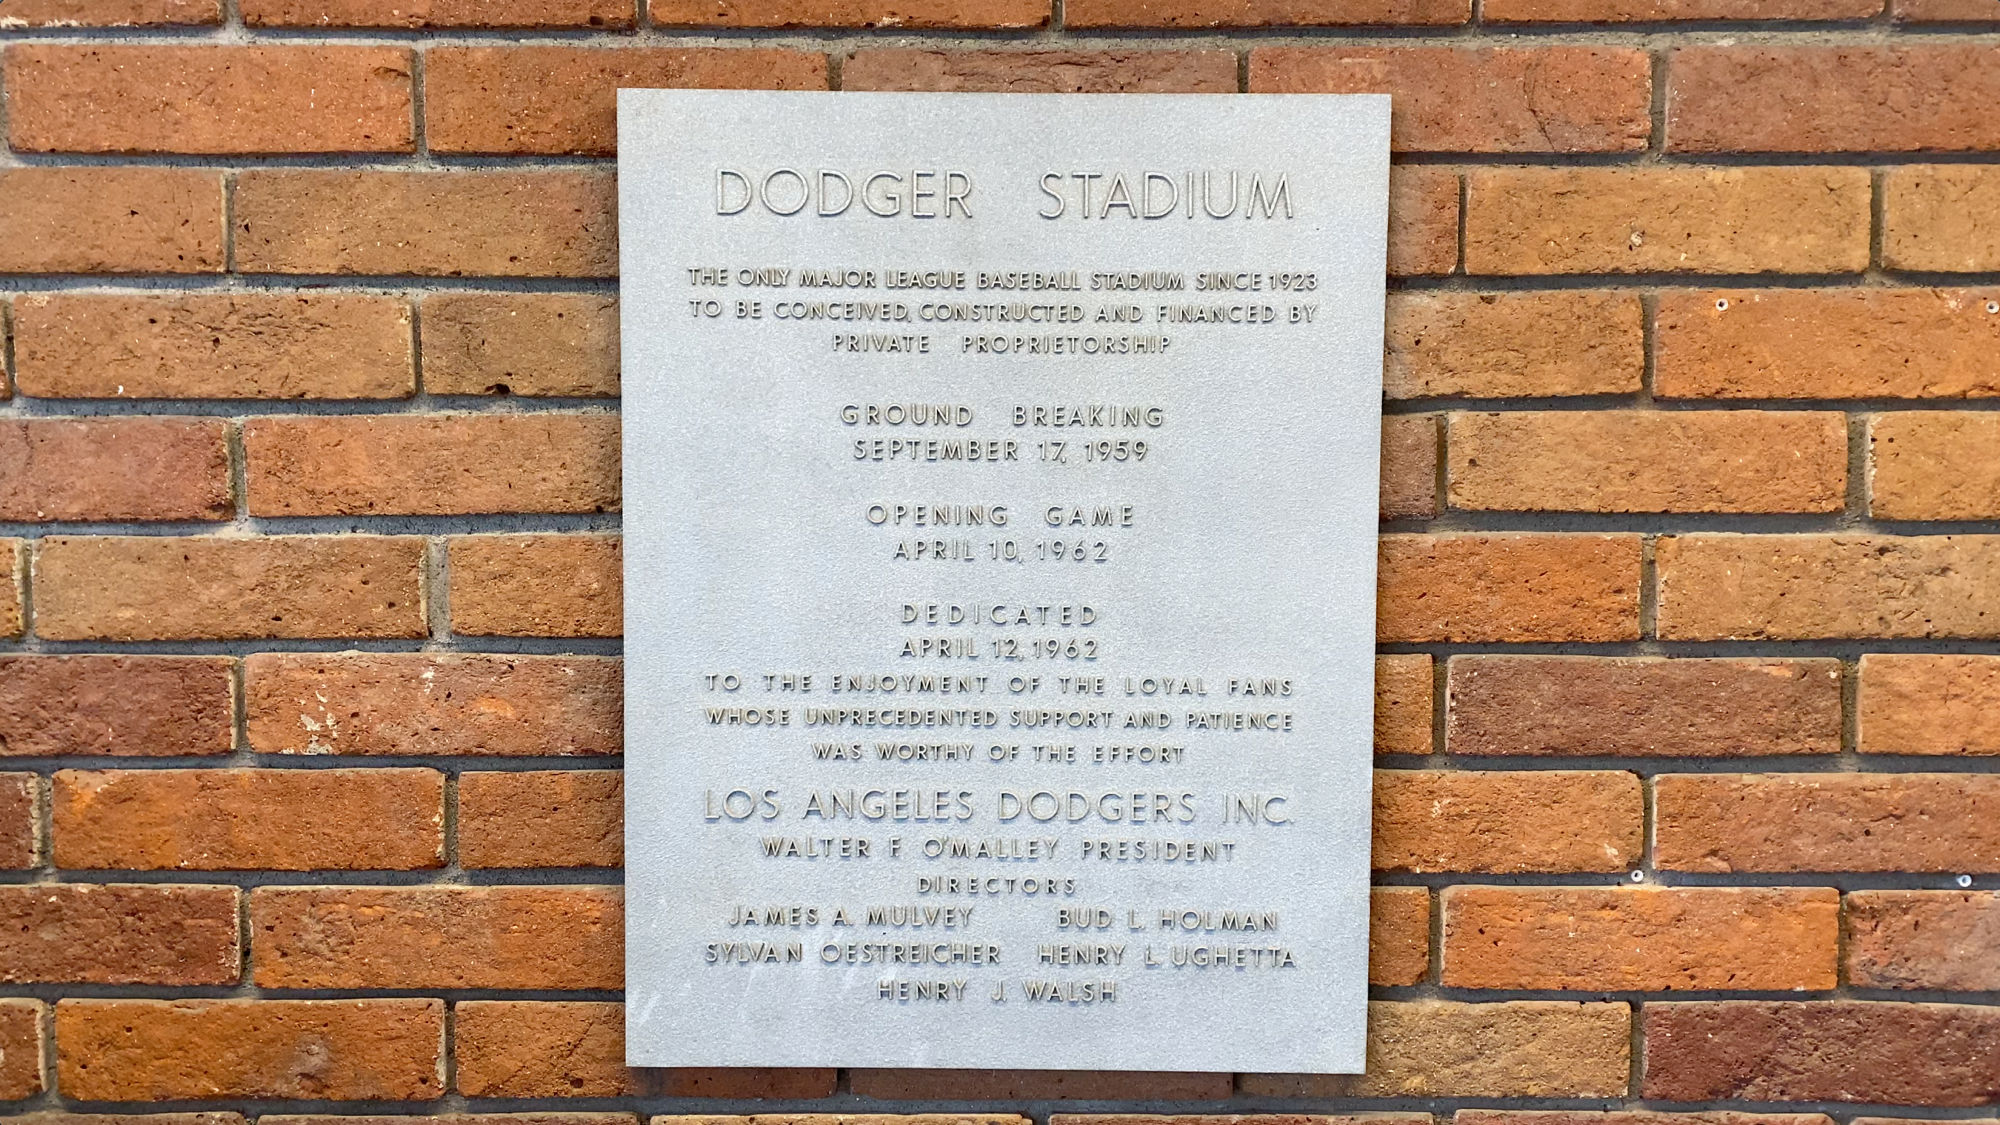 Dodger Stadium Private Proprietorship